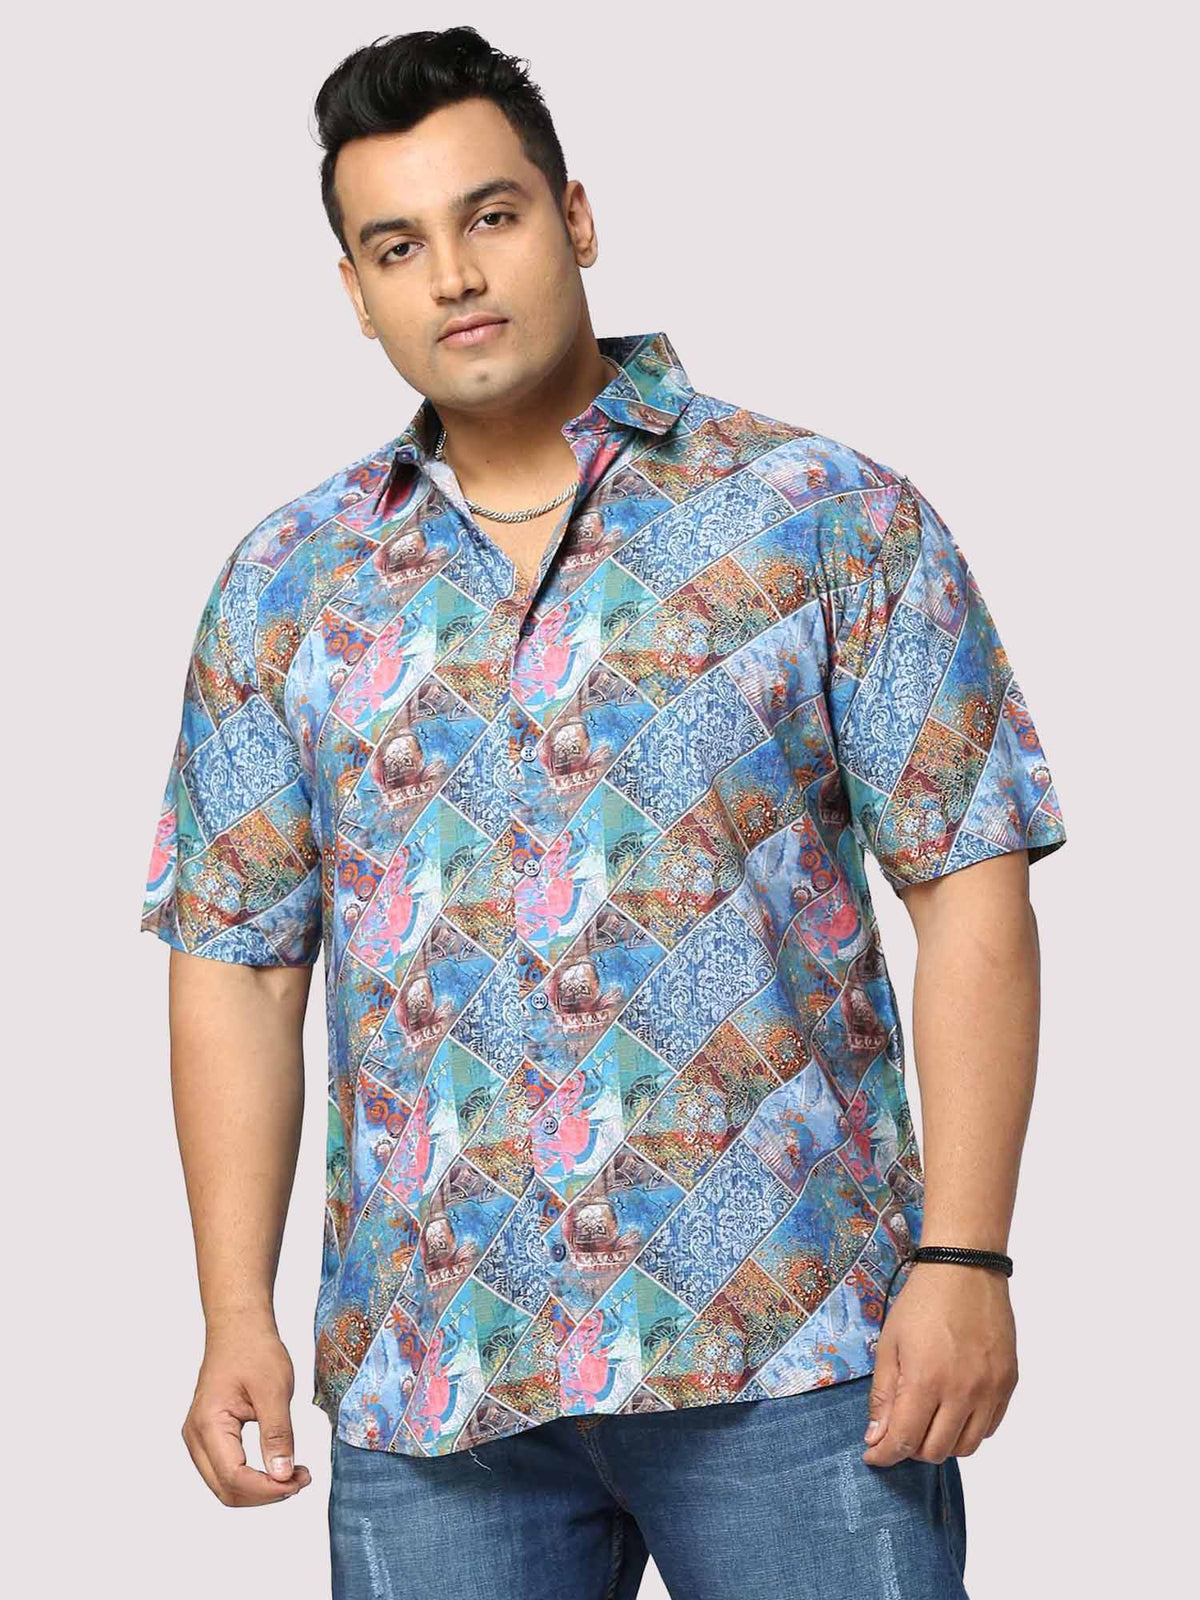 Tech Digital Printed Half Shirt Men's Plus Size - Guniaa Fashions